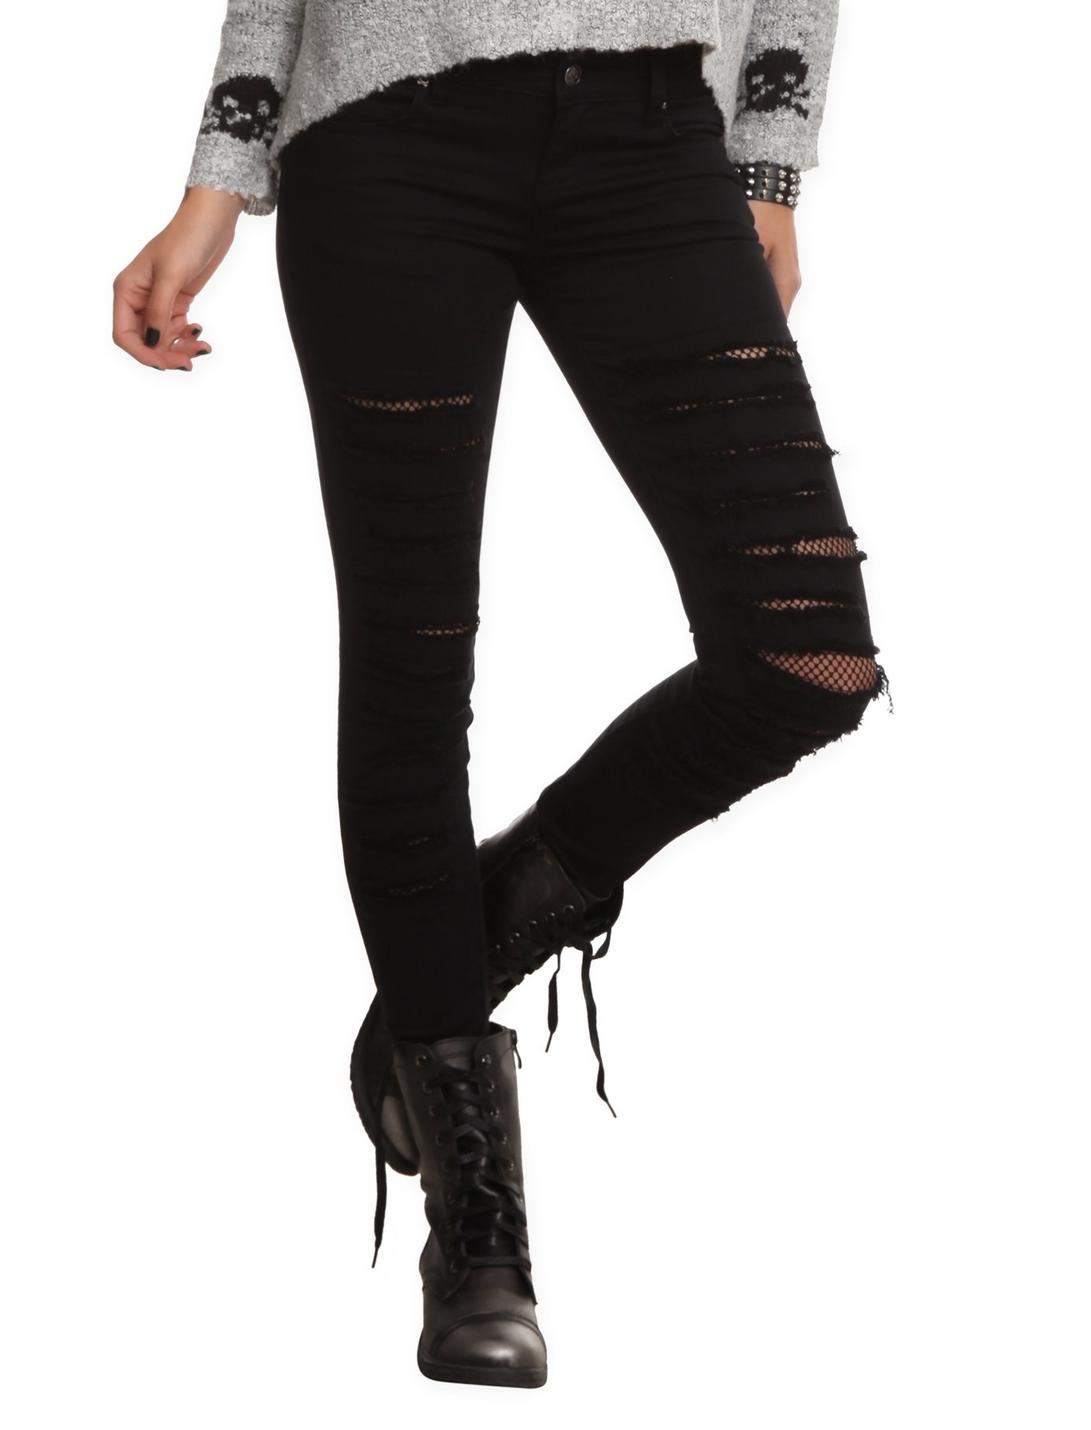 Royal Bones By Tripp Black Fishnet Skinny Jeans, BLACK, hi-res